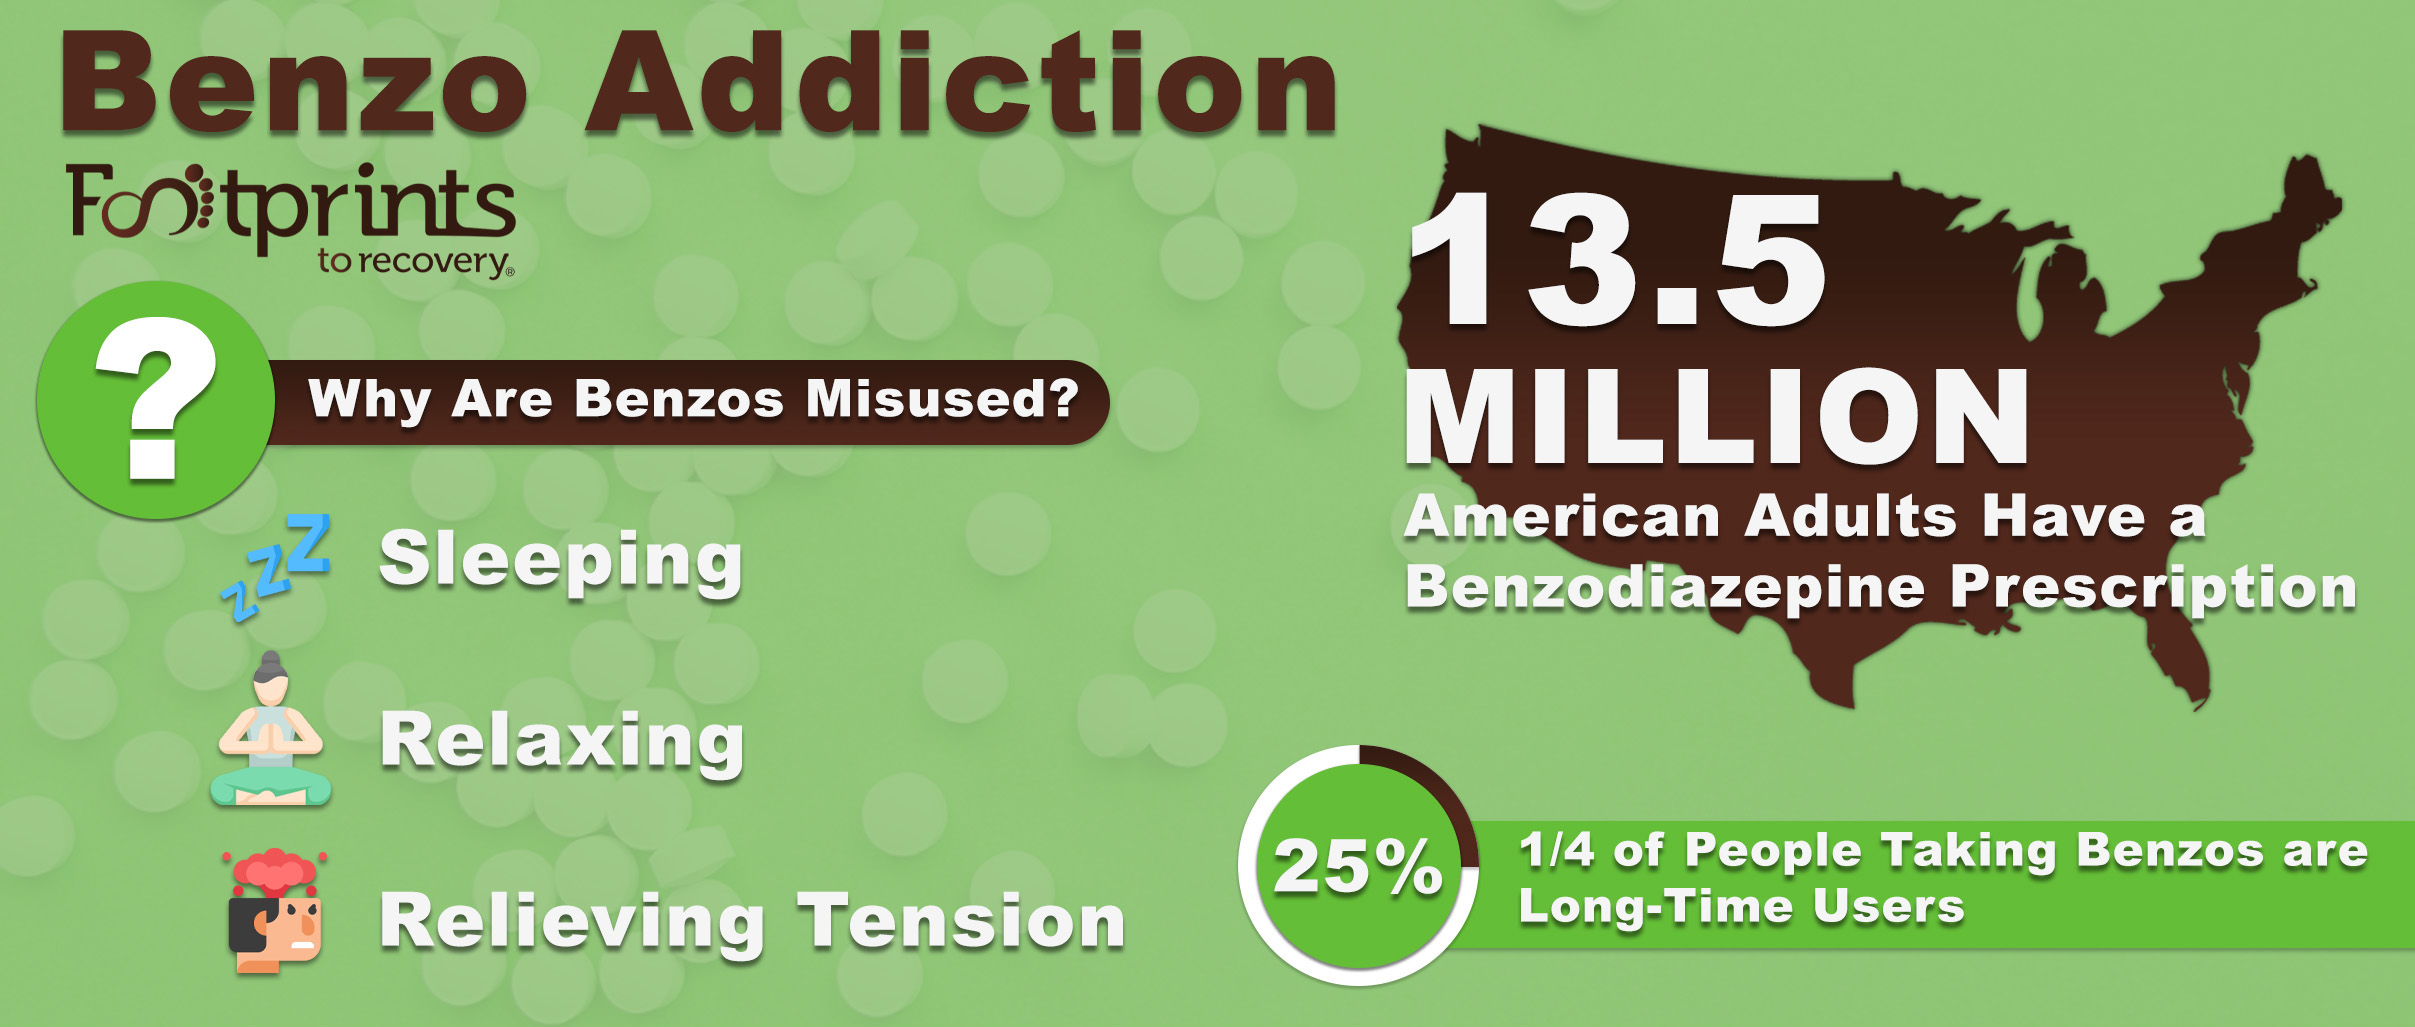 benzodiazepine addiction statistics